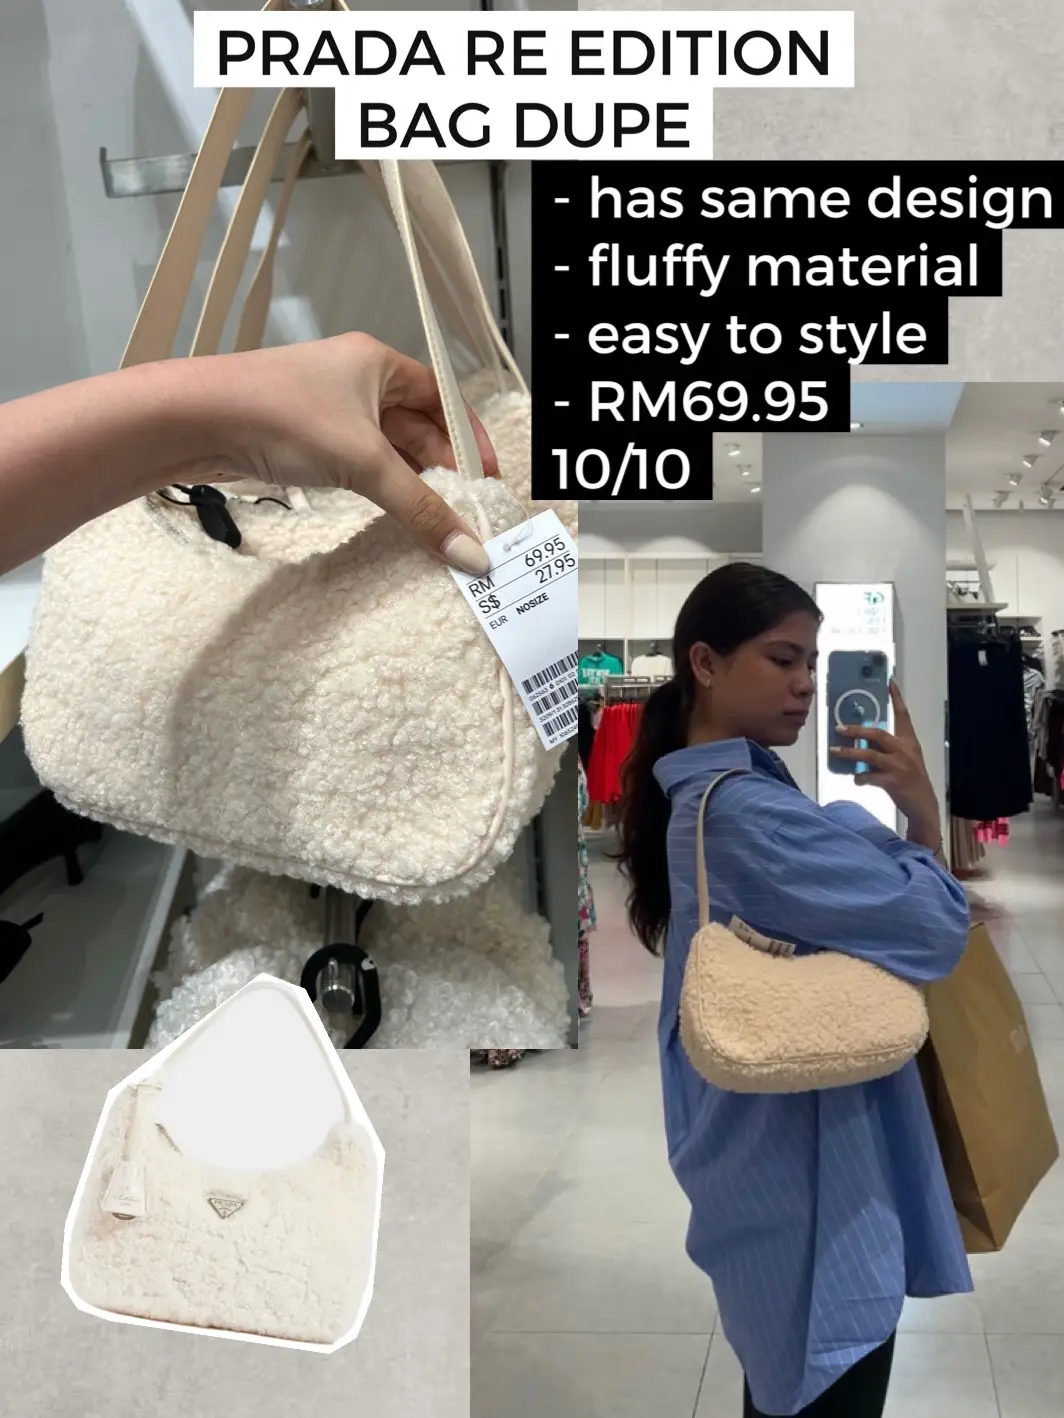 Louis Vuitton puffer dupe bag Affordable Handbags✨#fyp